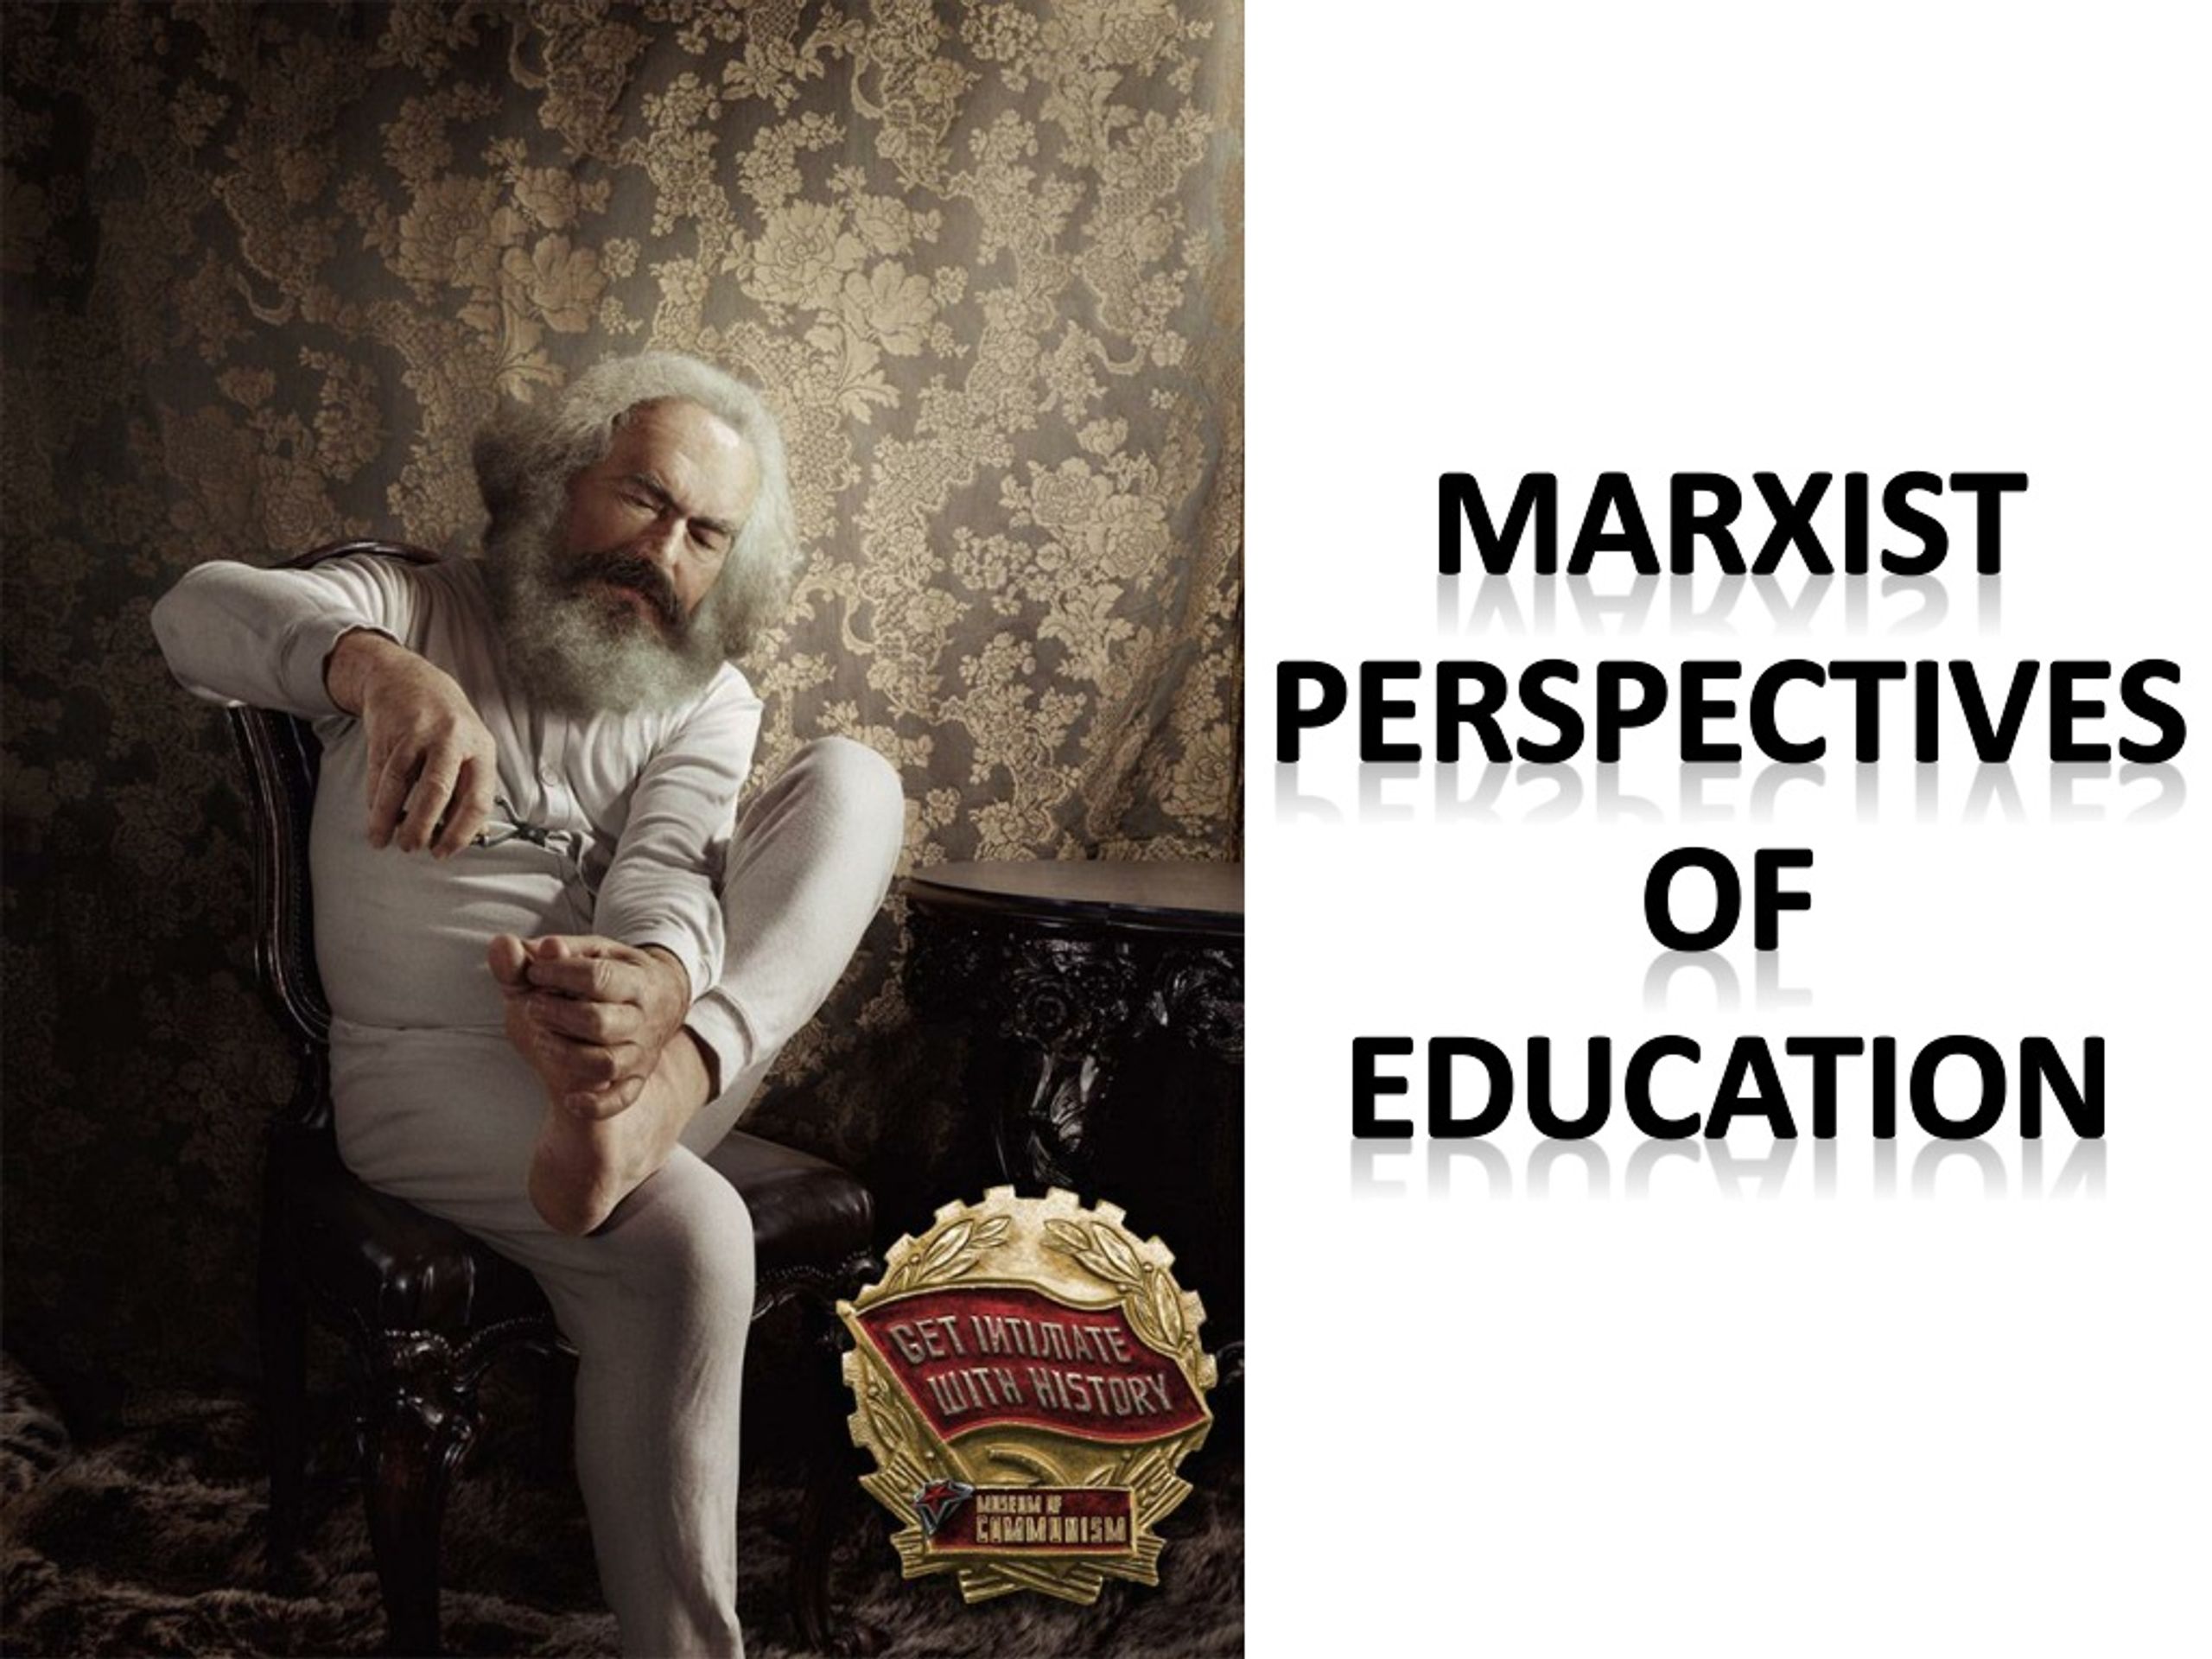 the marxist theory education